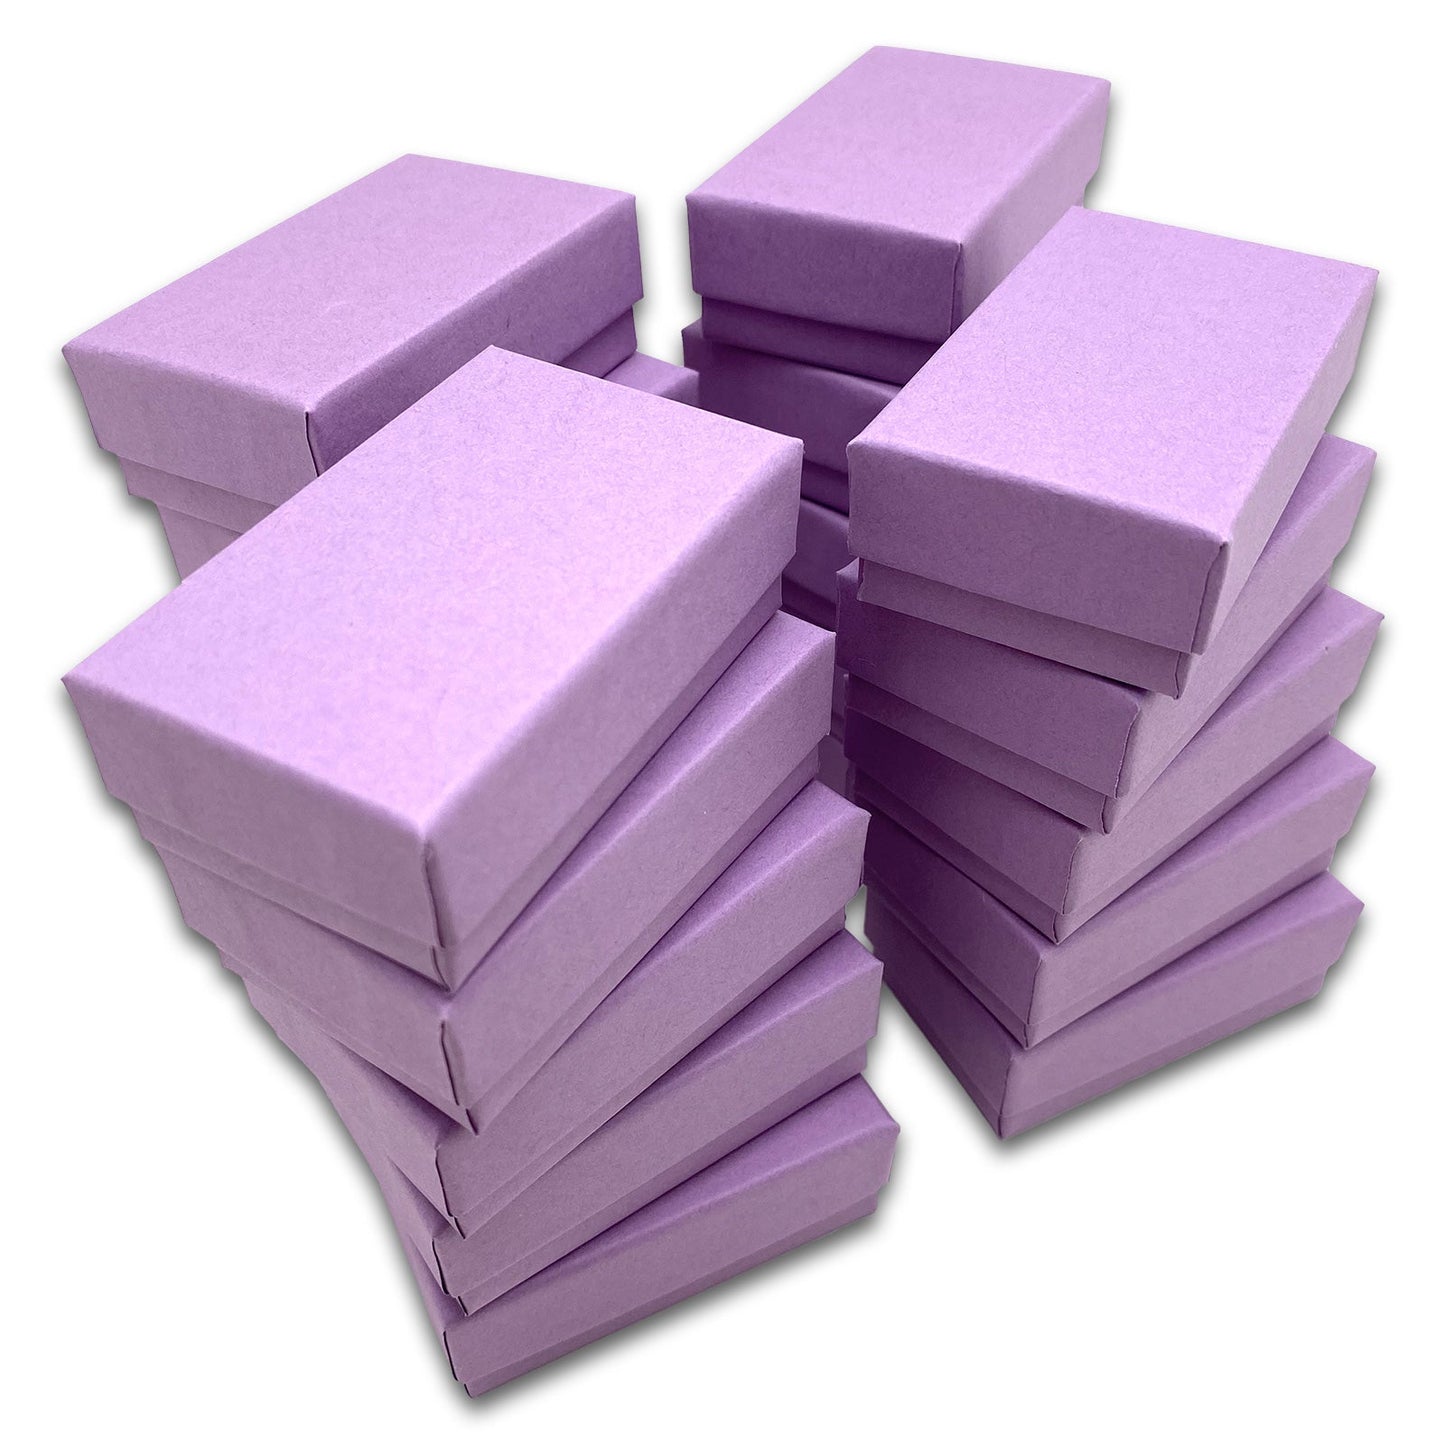 #21 - 2 5/8" x 1 5/8" x 1" Matte Purple Cotton Filled Paper Box